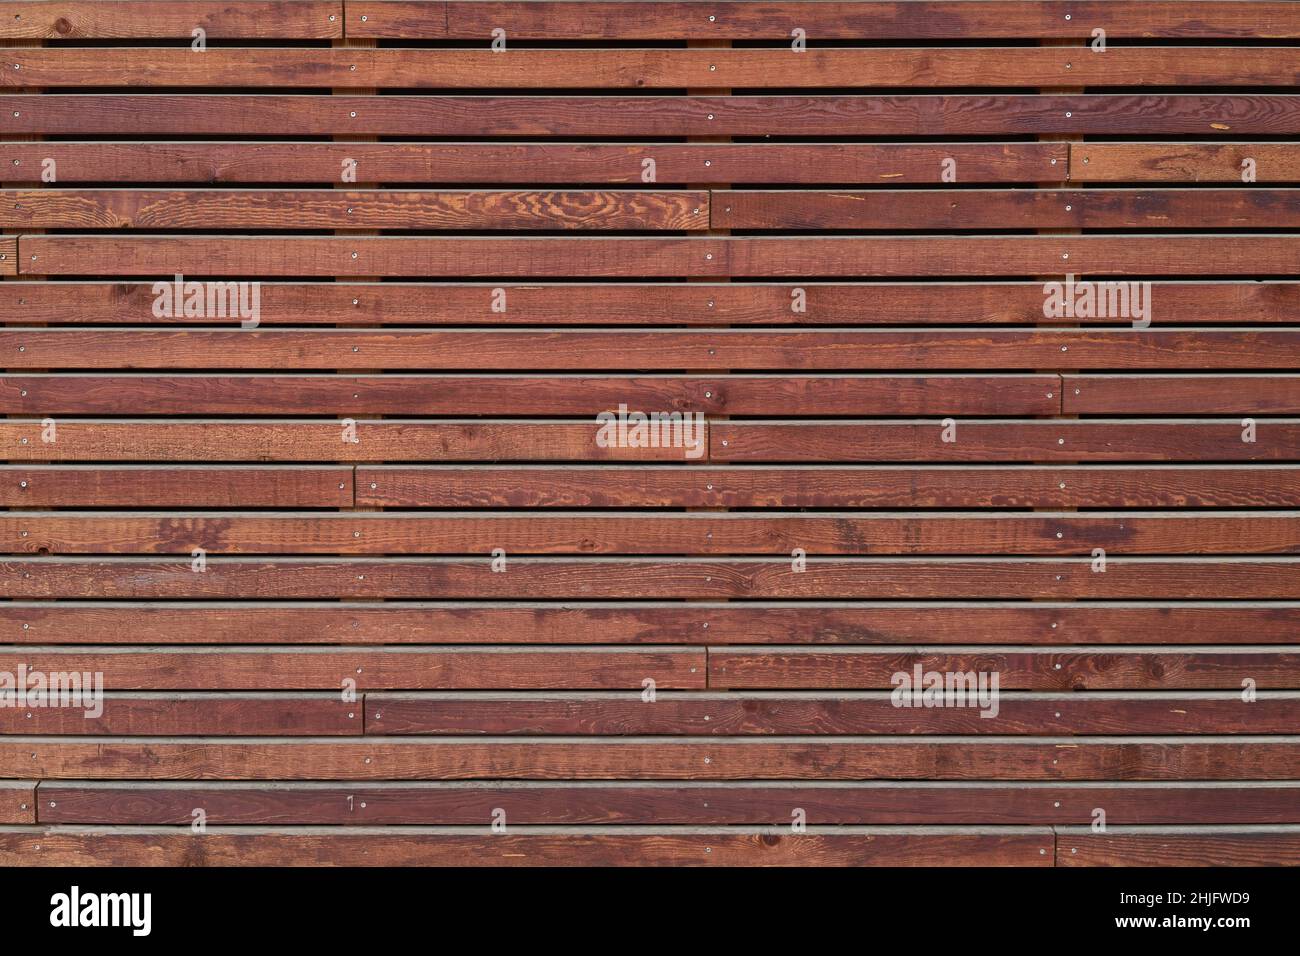 Wood paneling with wooden slats Stock Photo